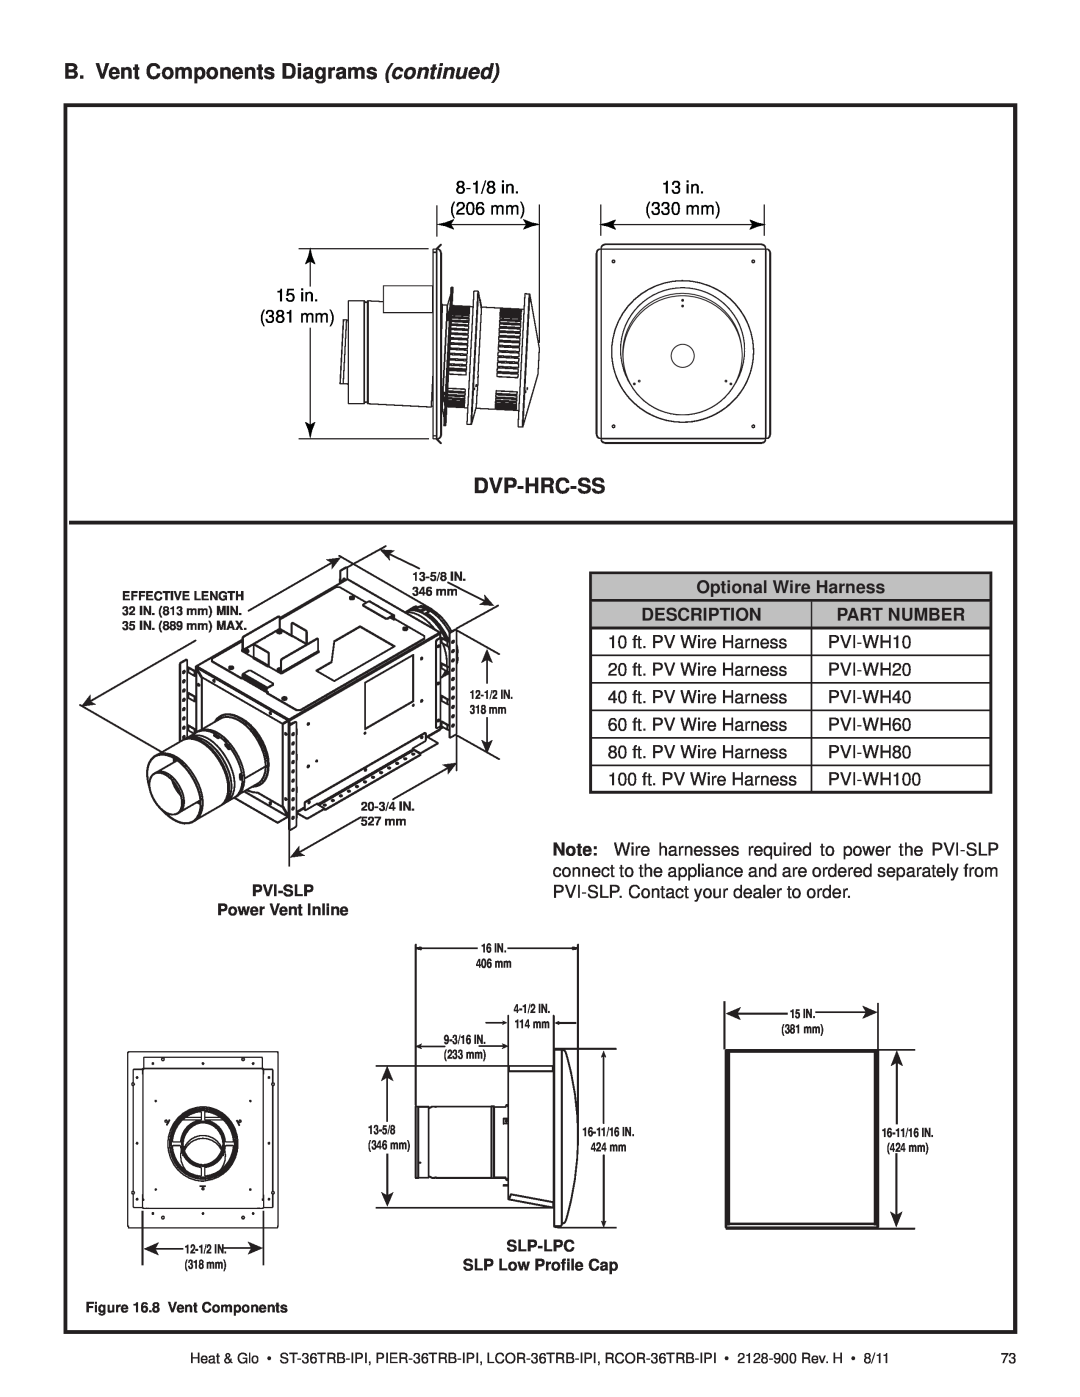 Heat & Glo LifeStyle ST-36TRB-IPI Dvp-Hrc-Ss, B. Vent Components Diagrams continued, Optional Wire Harness, Description 